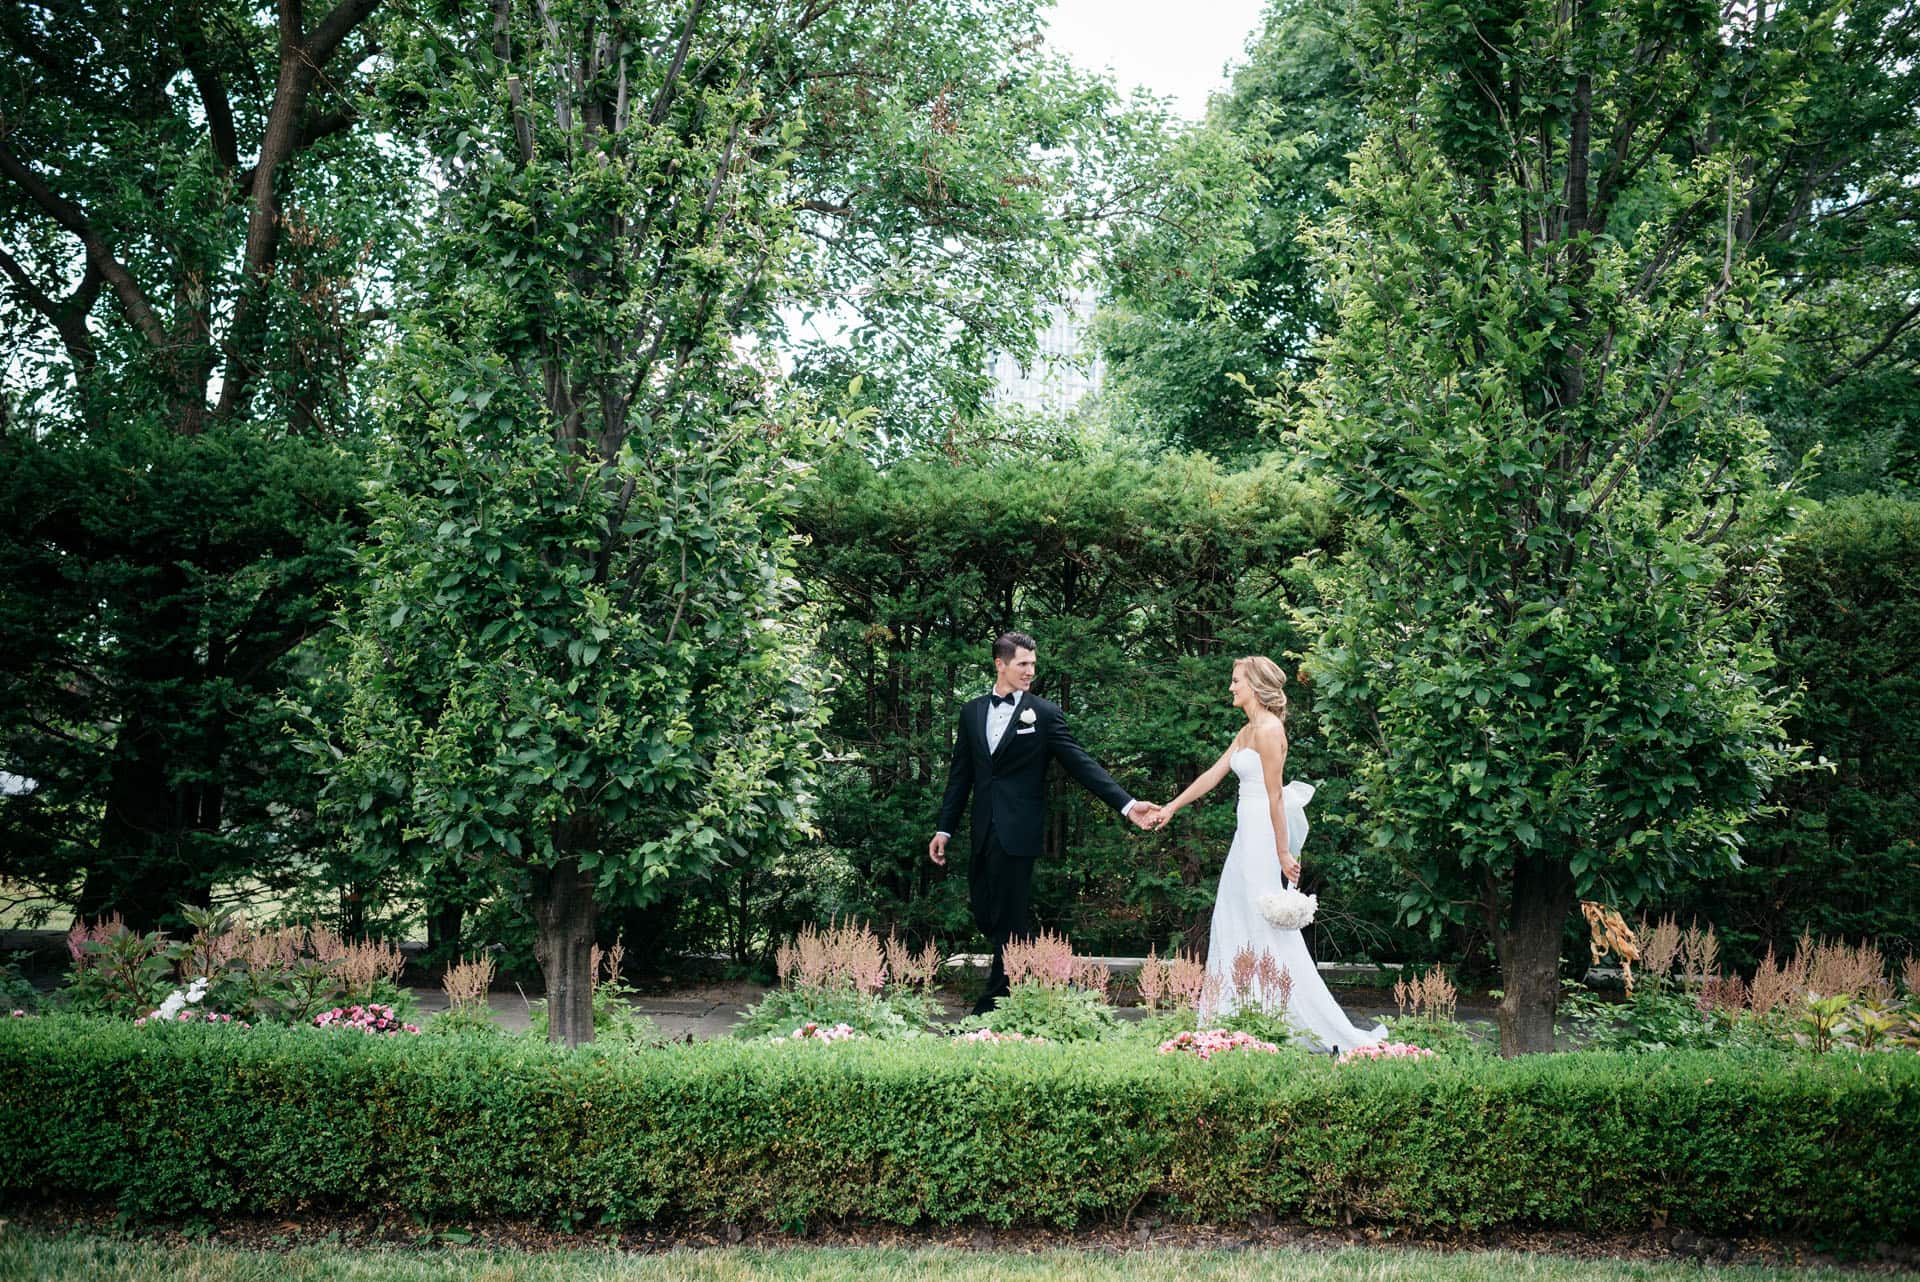 Graydon Hall Manor Wedding | Toronto Wedding Studios | Creative Wedding Photography